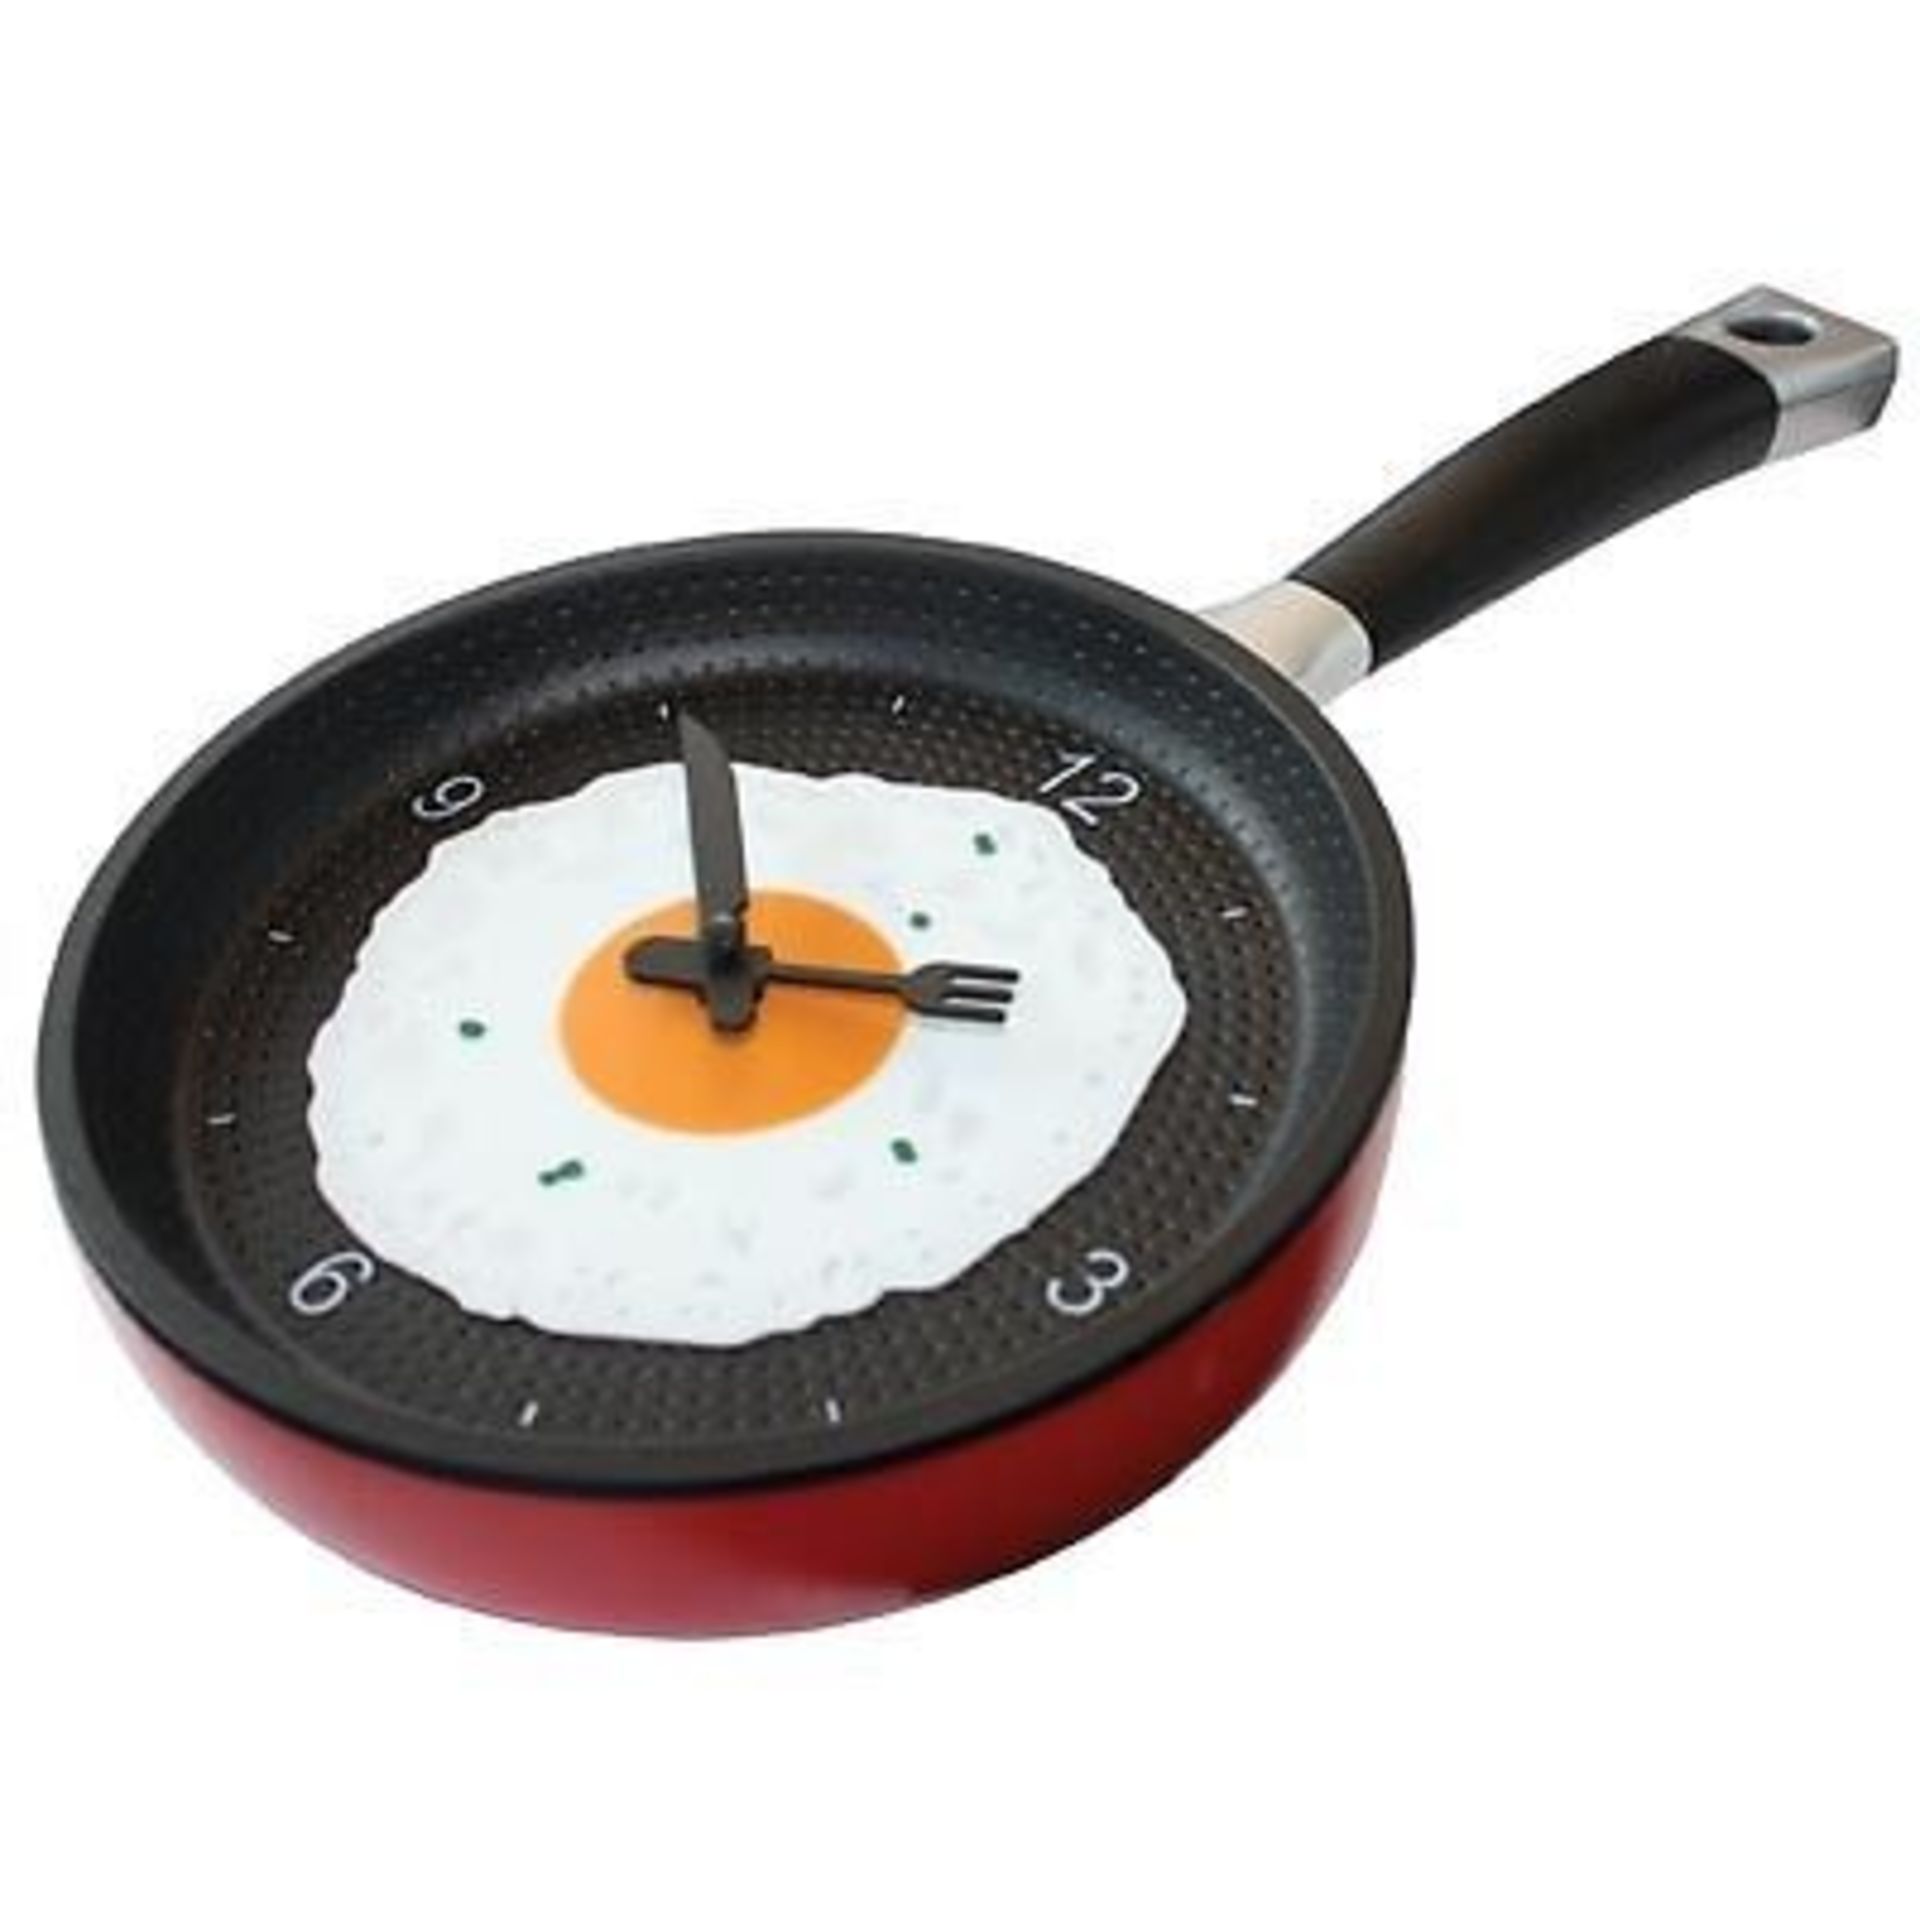 V Brand New Frying Pan Wall Clock (Colour may vary)